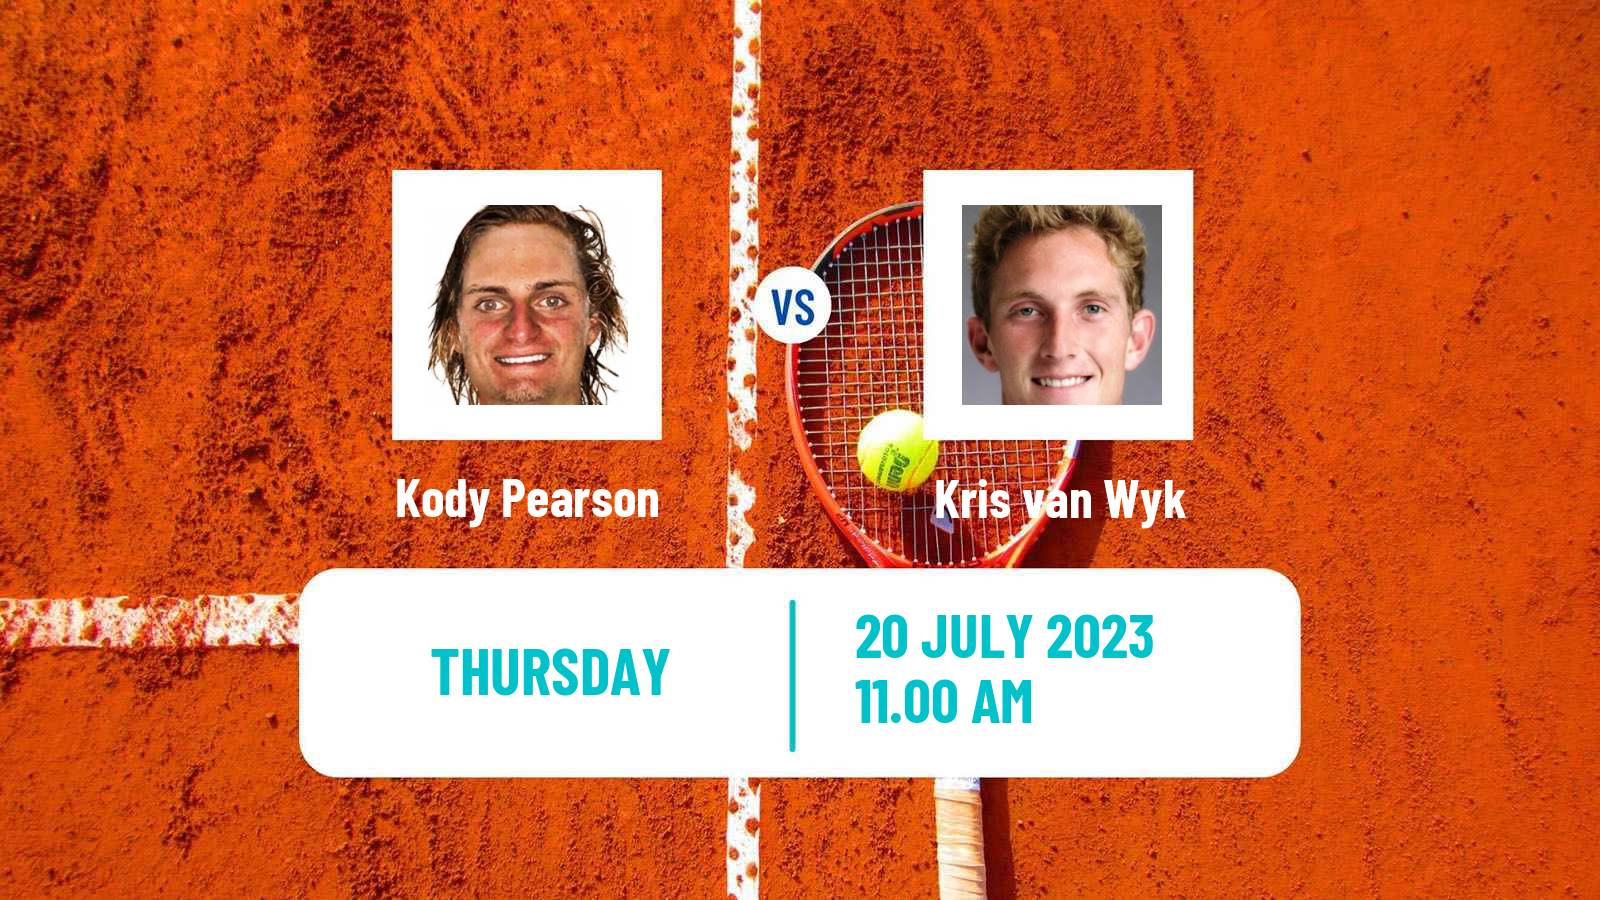 Tennis ITF M15 Monastir 29 Men Kody Pearson - Kris van Wyk